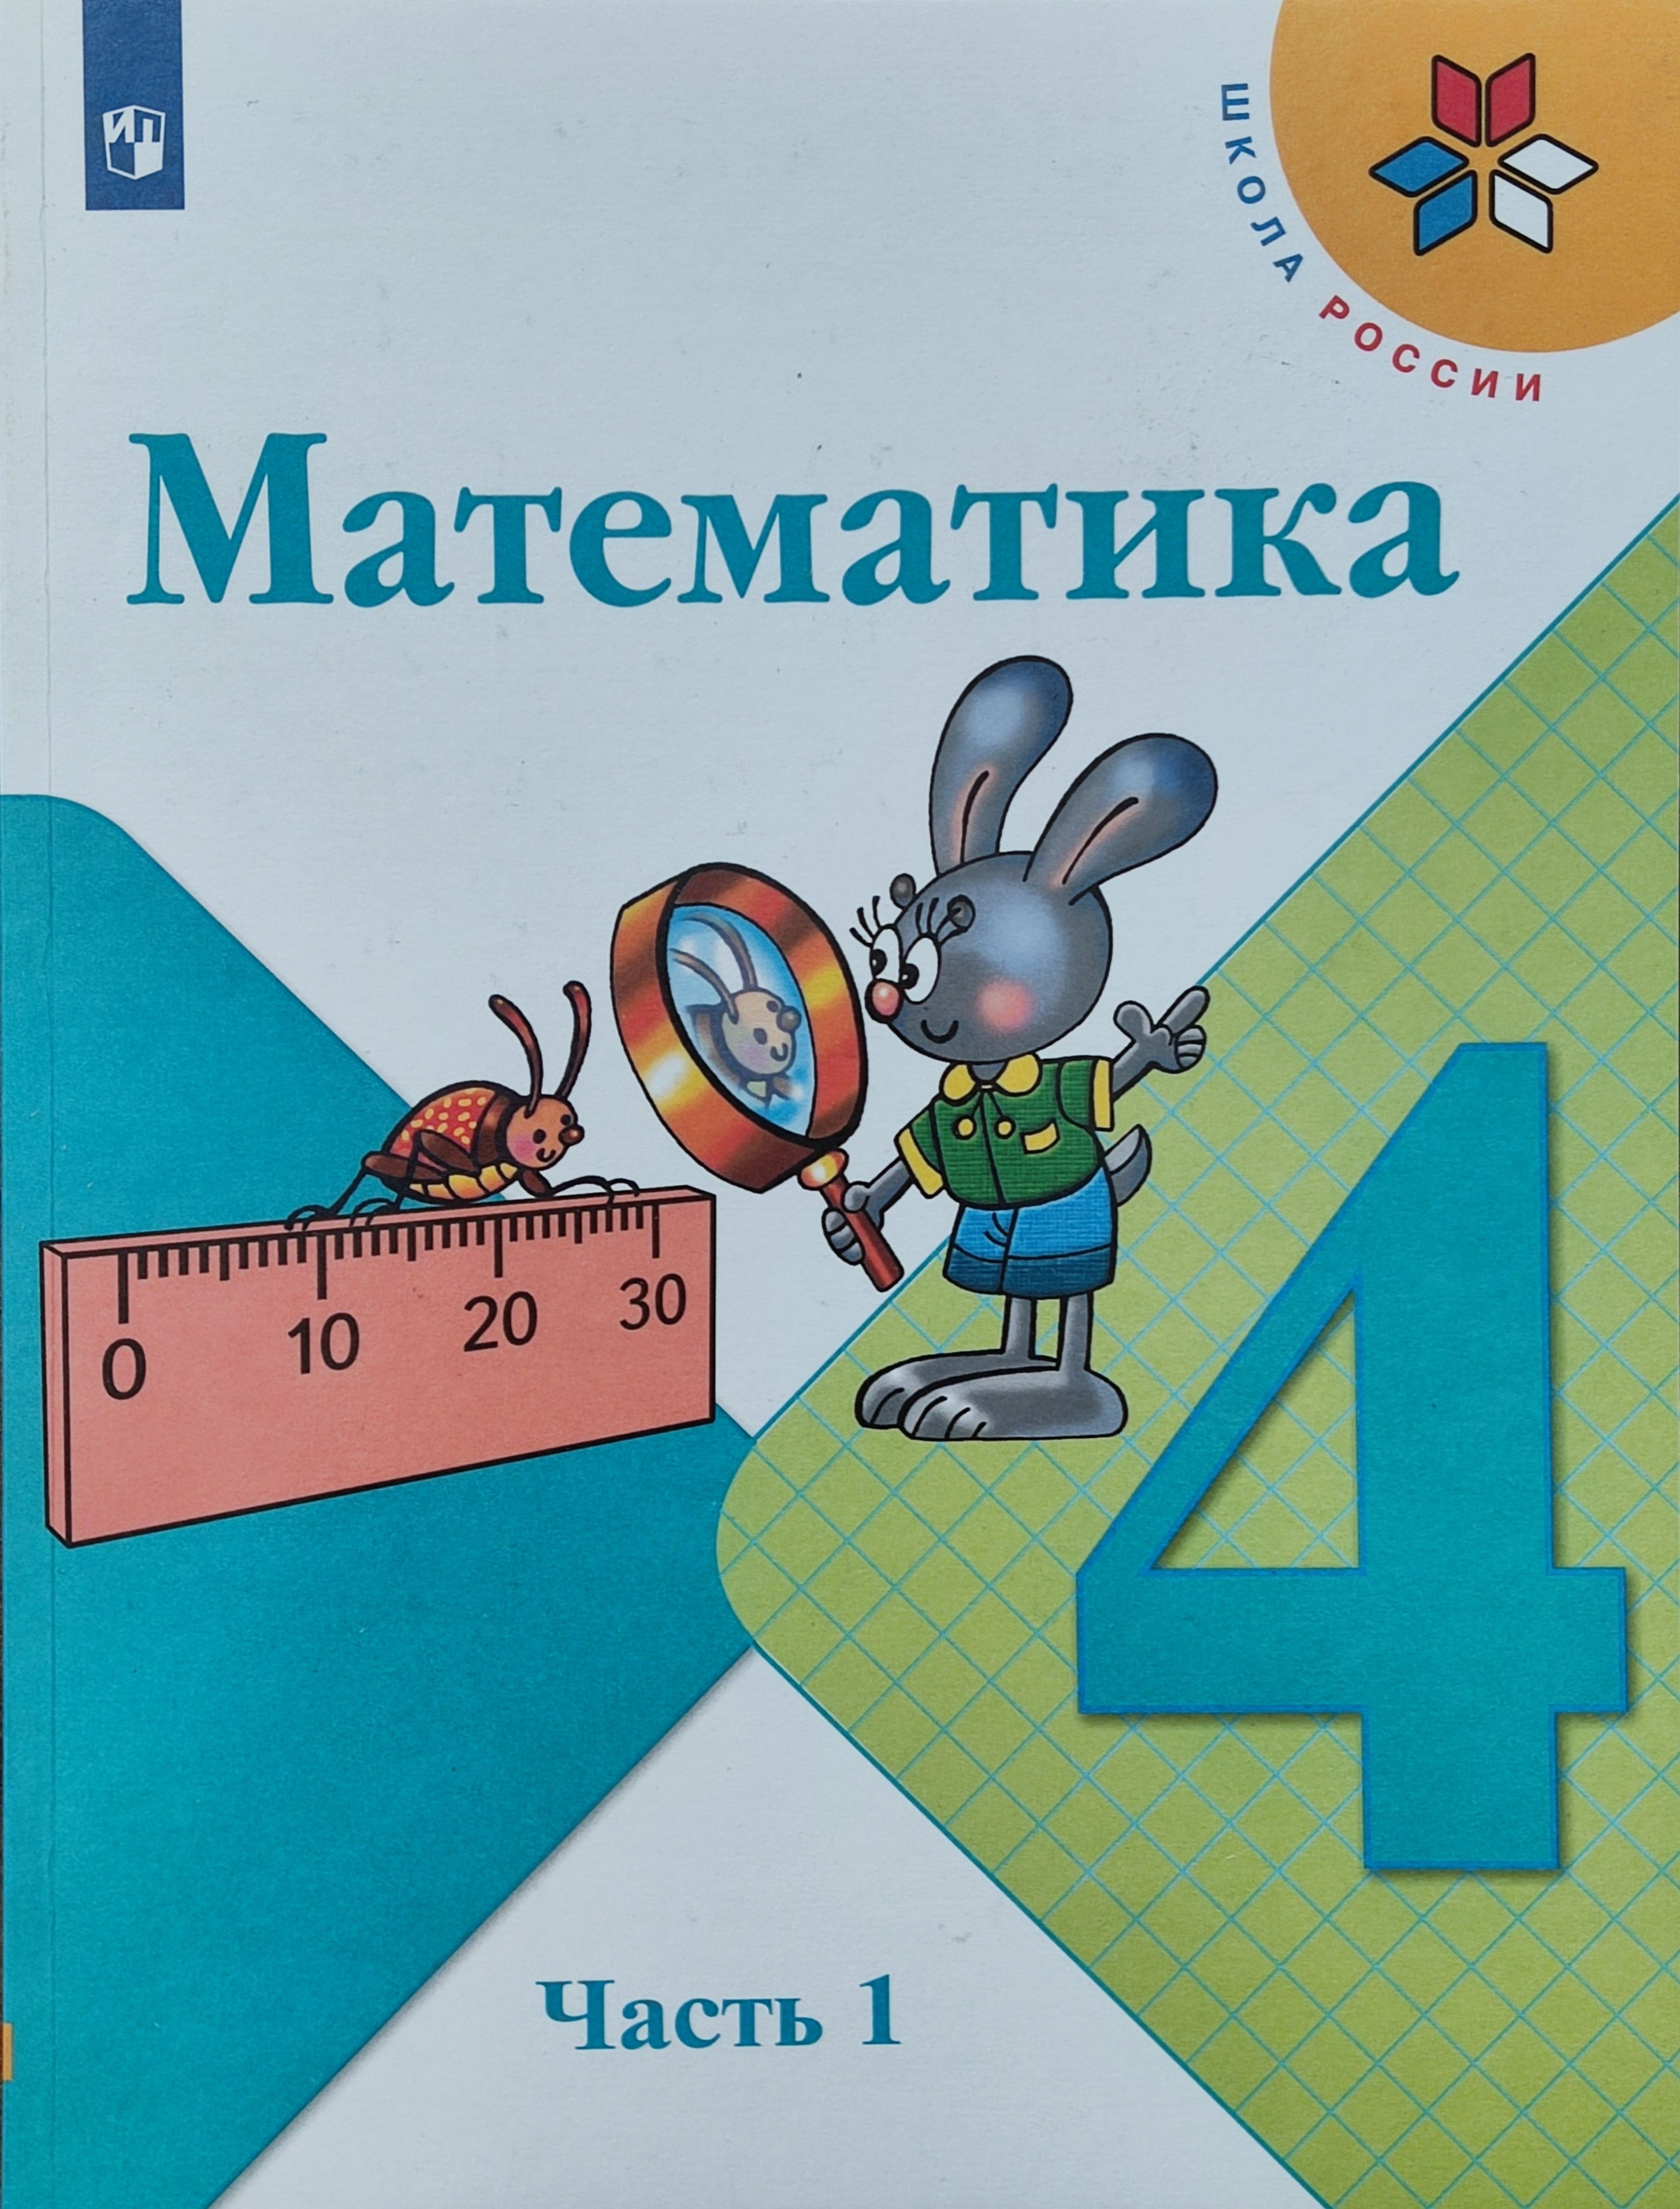 Математика 4 класса учебник